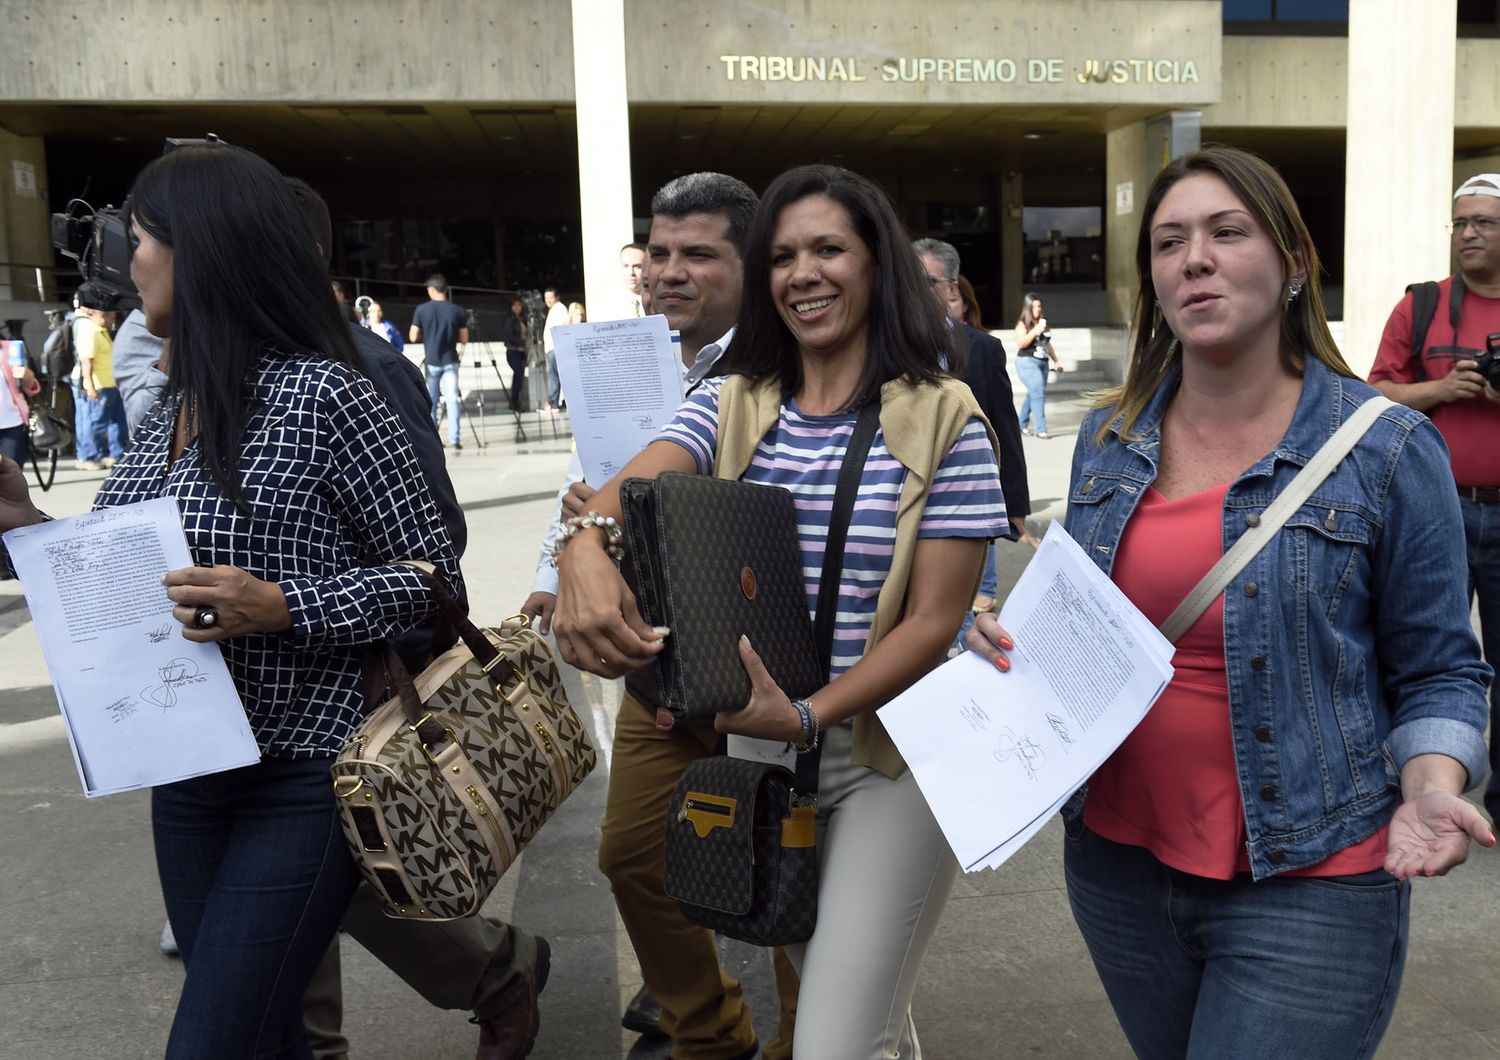 Mariela Magallanes, al centro, com le deputate dell'opposizione venezuelana Amelia Belisario e Melva Paredes&nbsp;